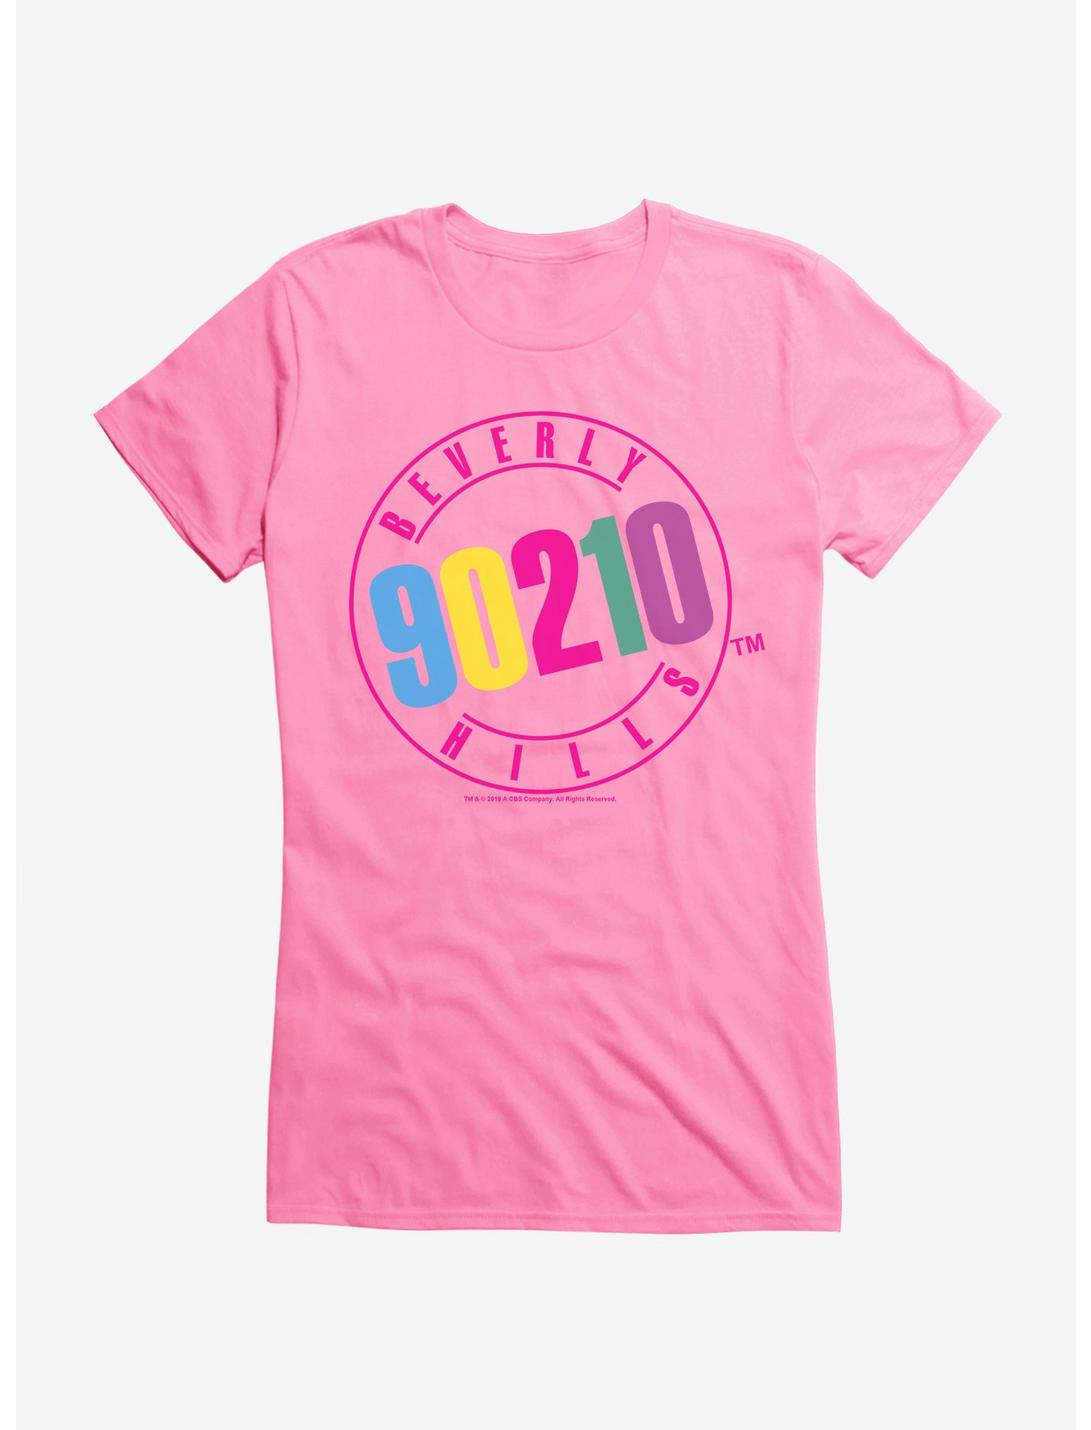 Beverly Hills 90210 Logo Girls T-Shirt, CHARITY PINK, hi-res